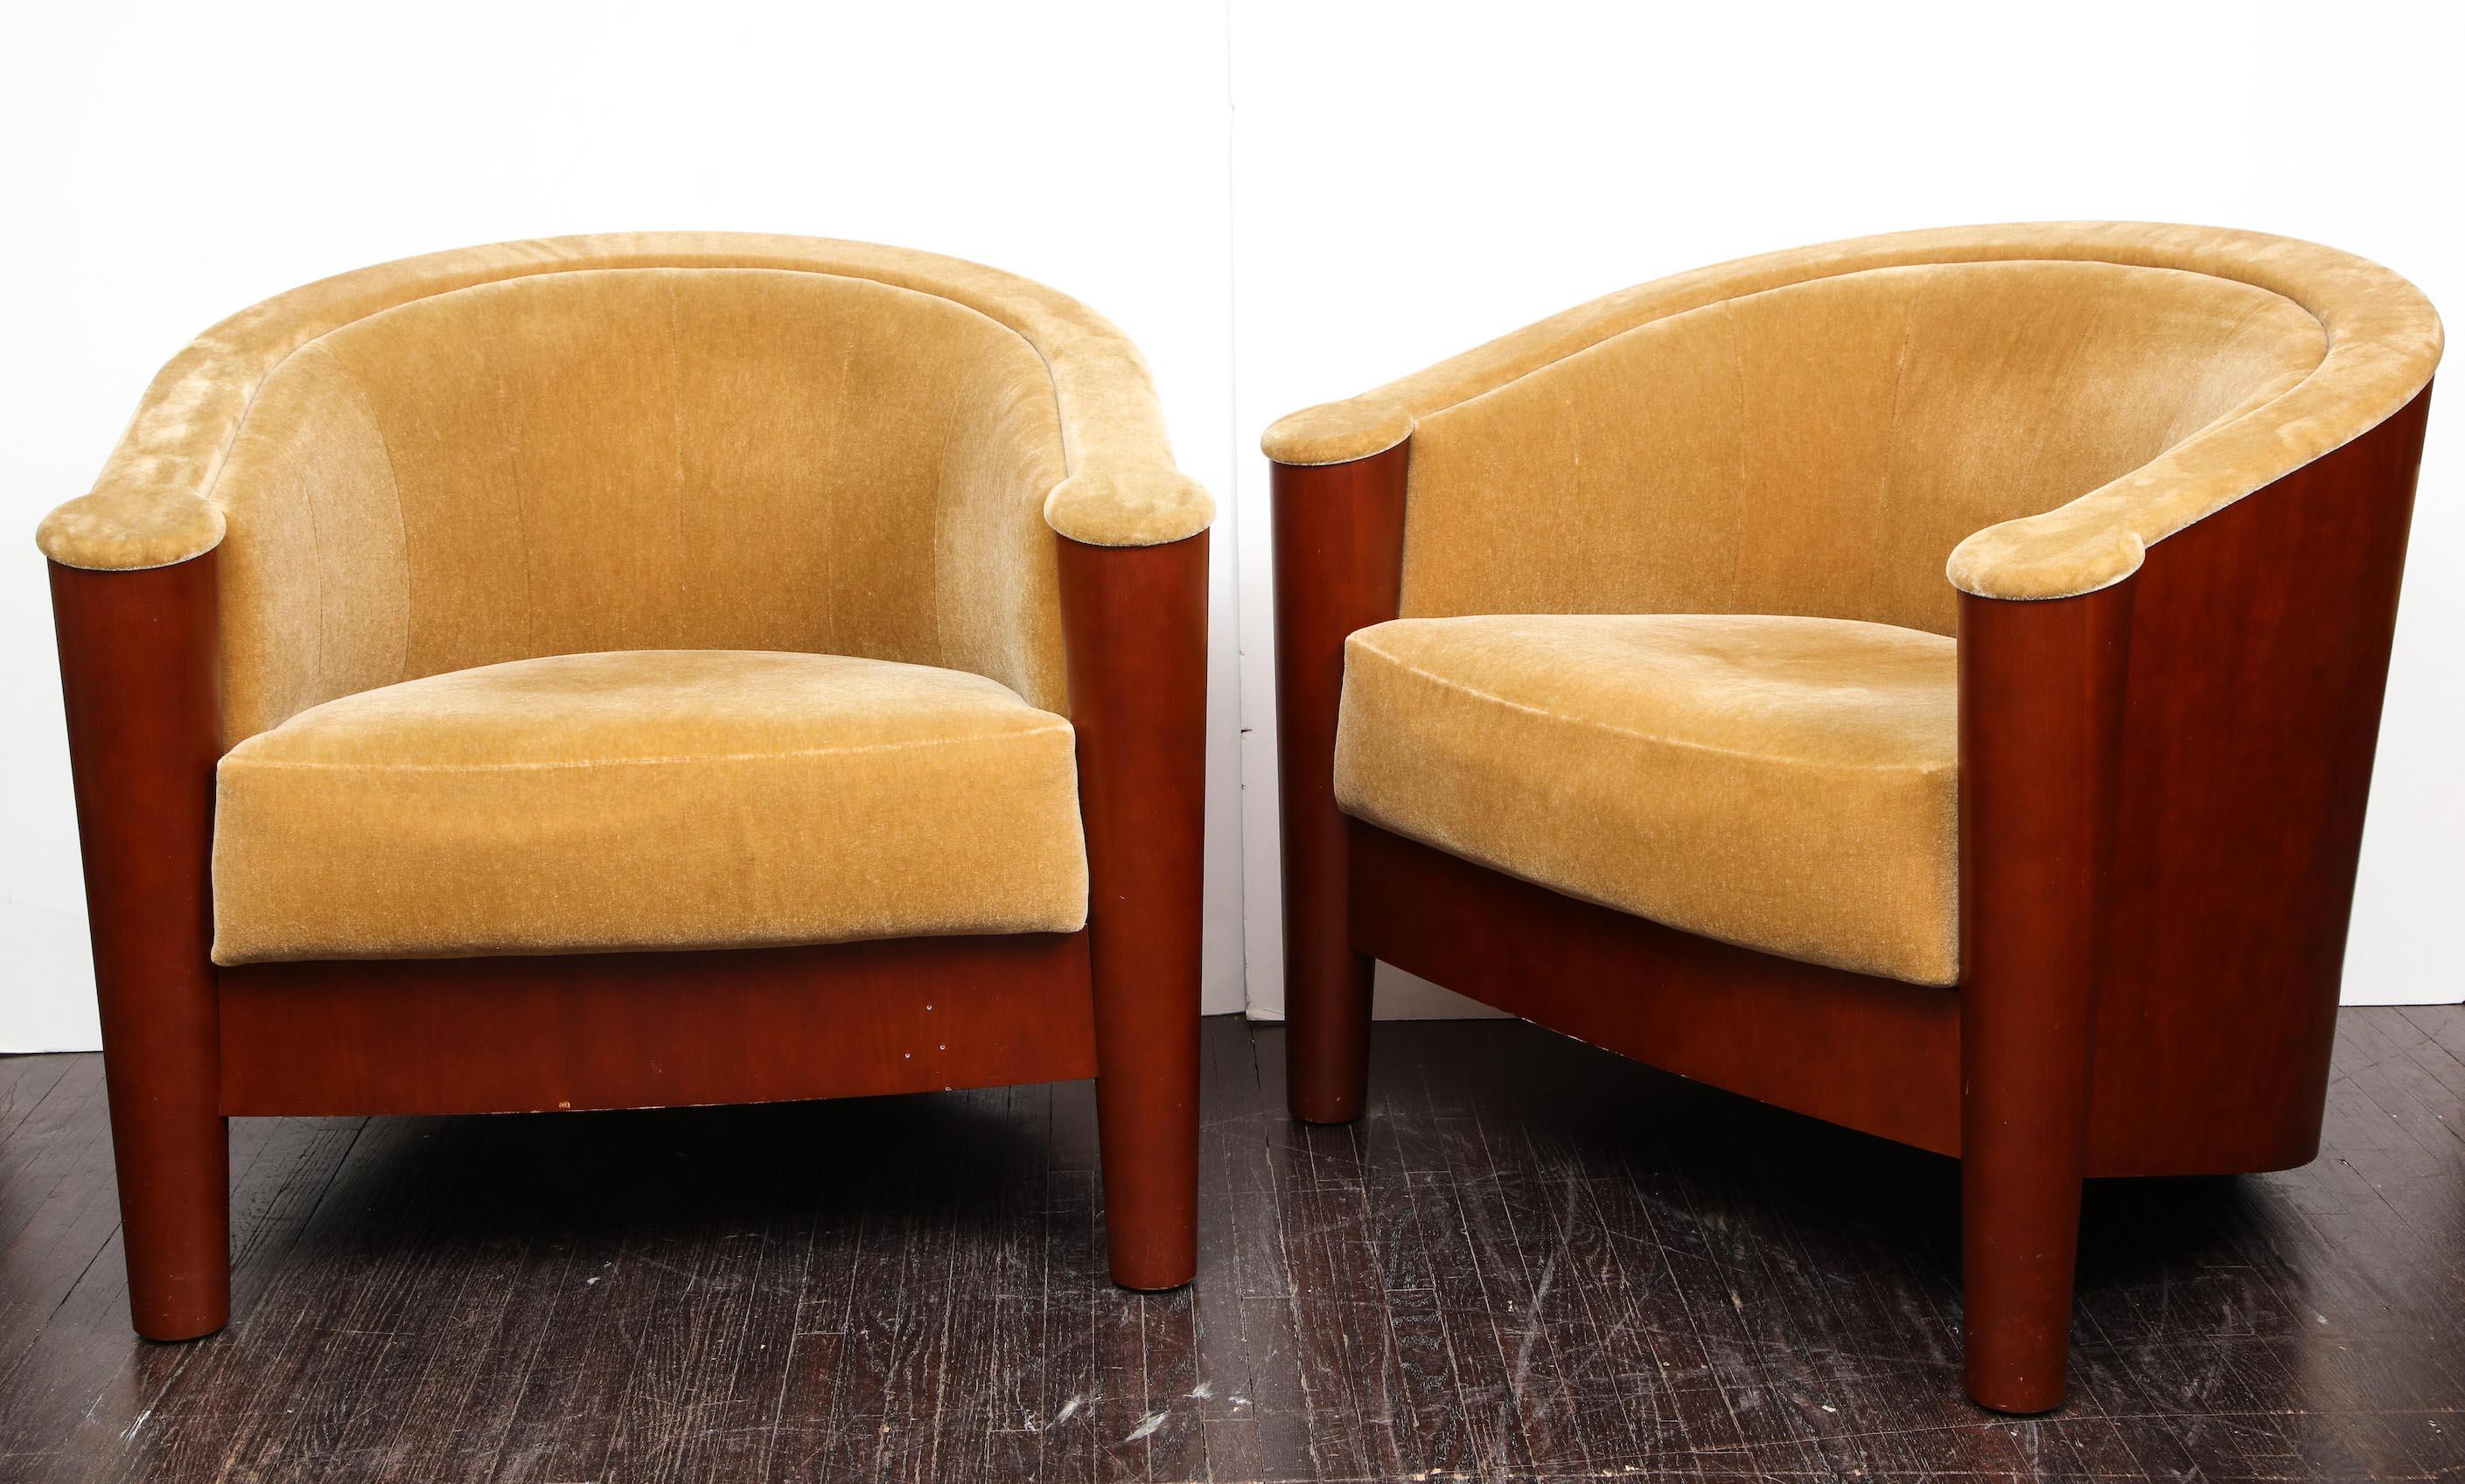 Pair of Art Deco Club Chairs (Art déco)